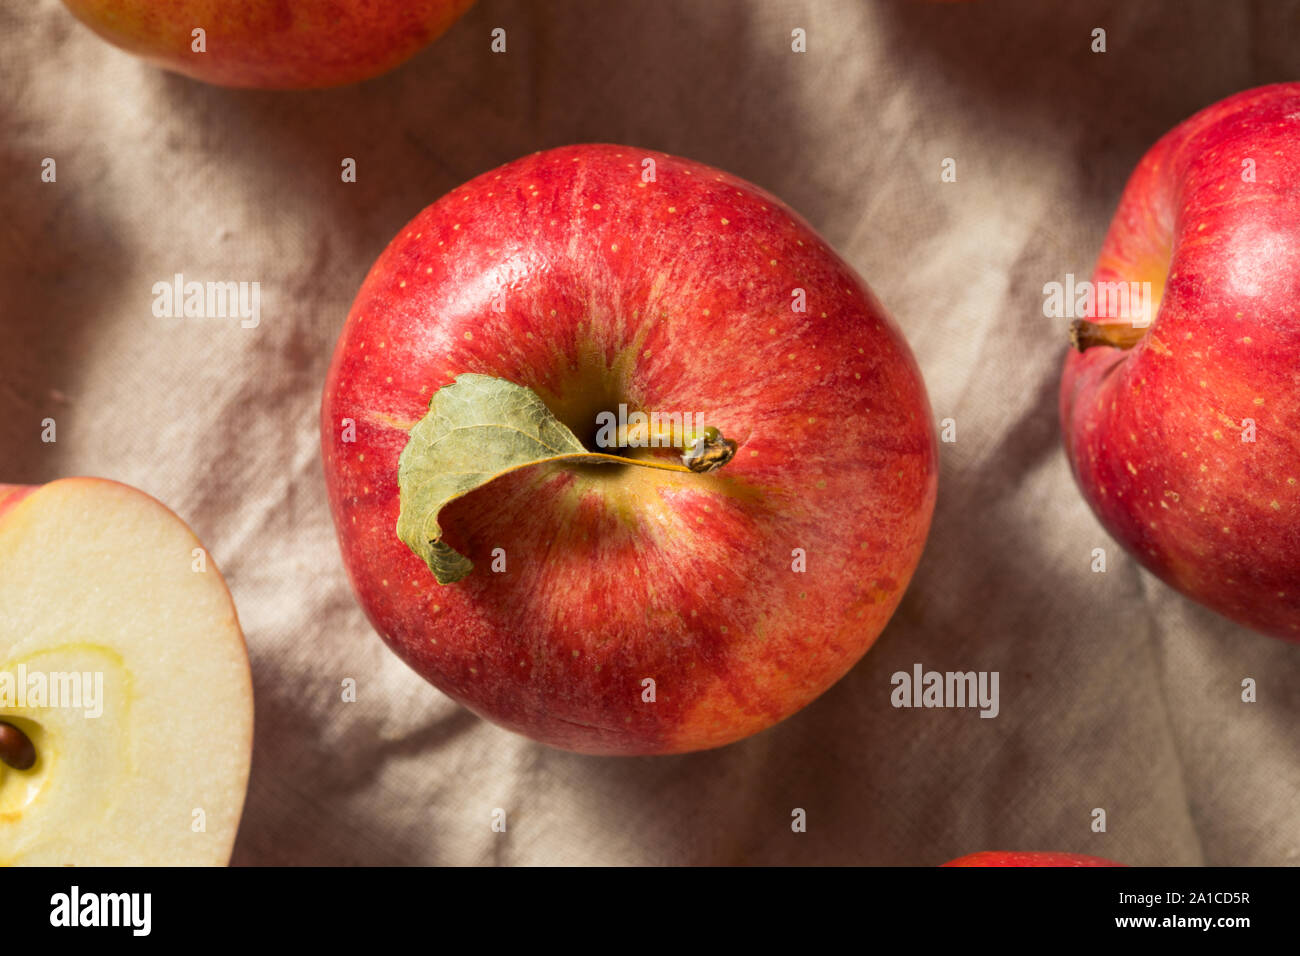 https://c8.alamy.com/comp/2A1CD5R/raw-red-organic-gala-apples-ready-to-eat-2A1CD5R.jpg